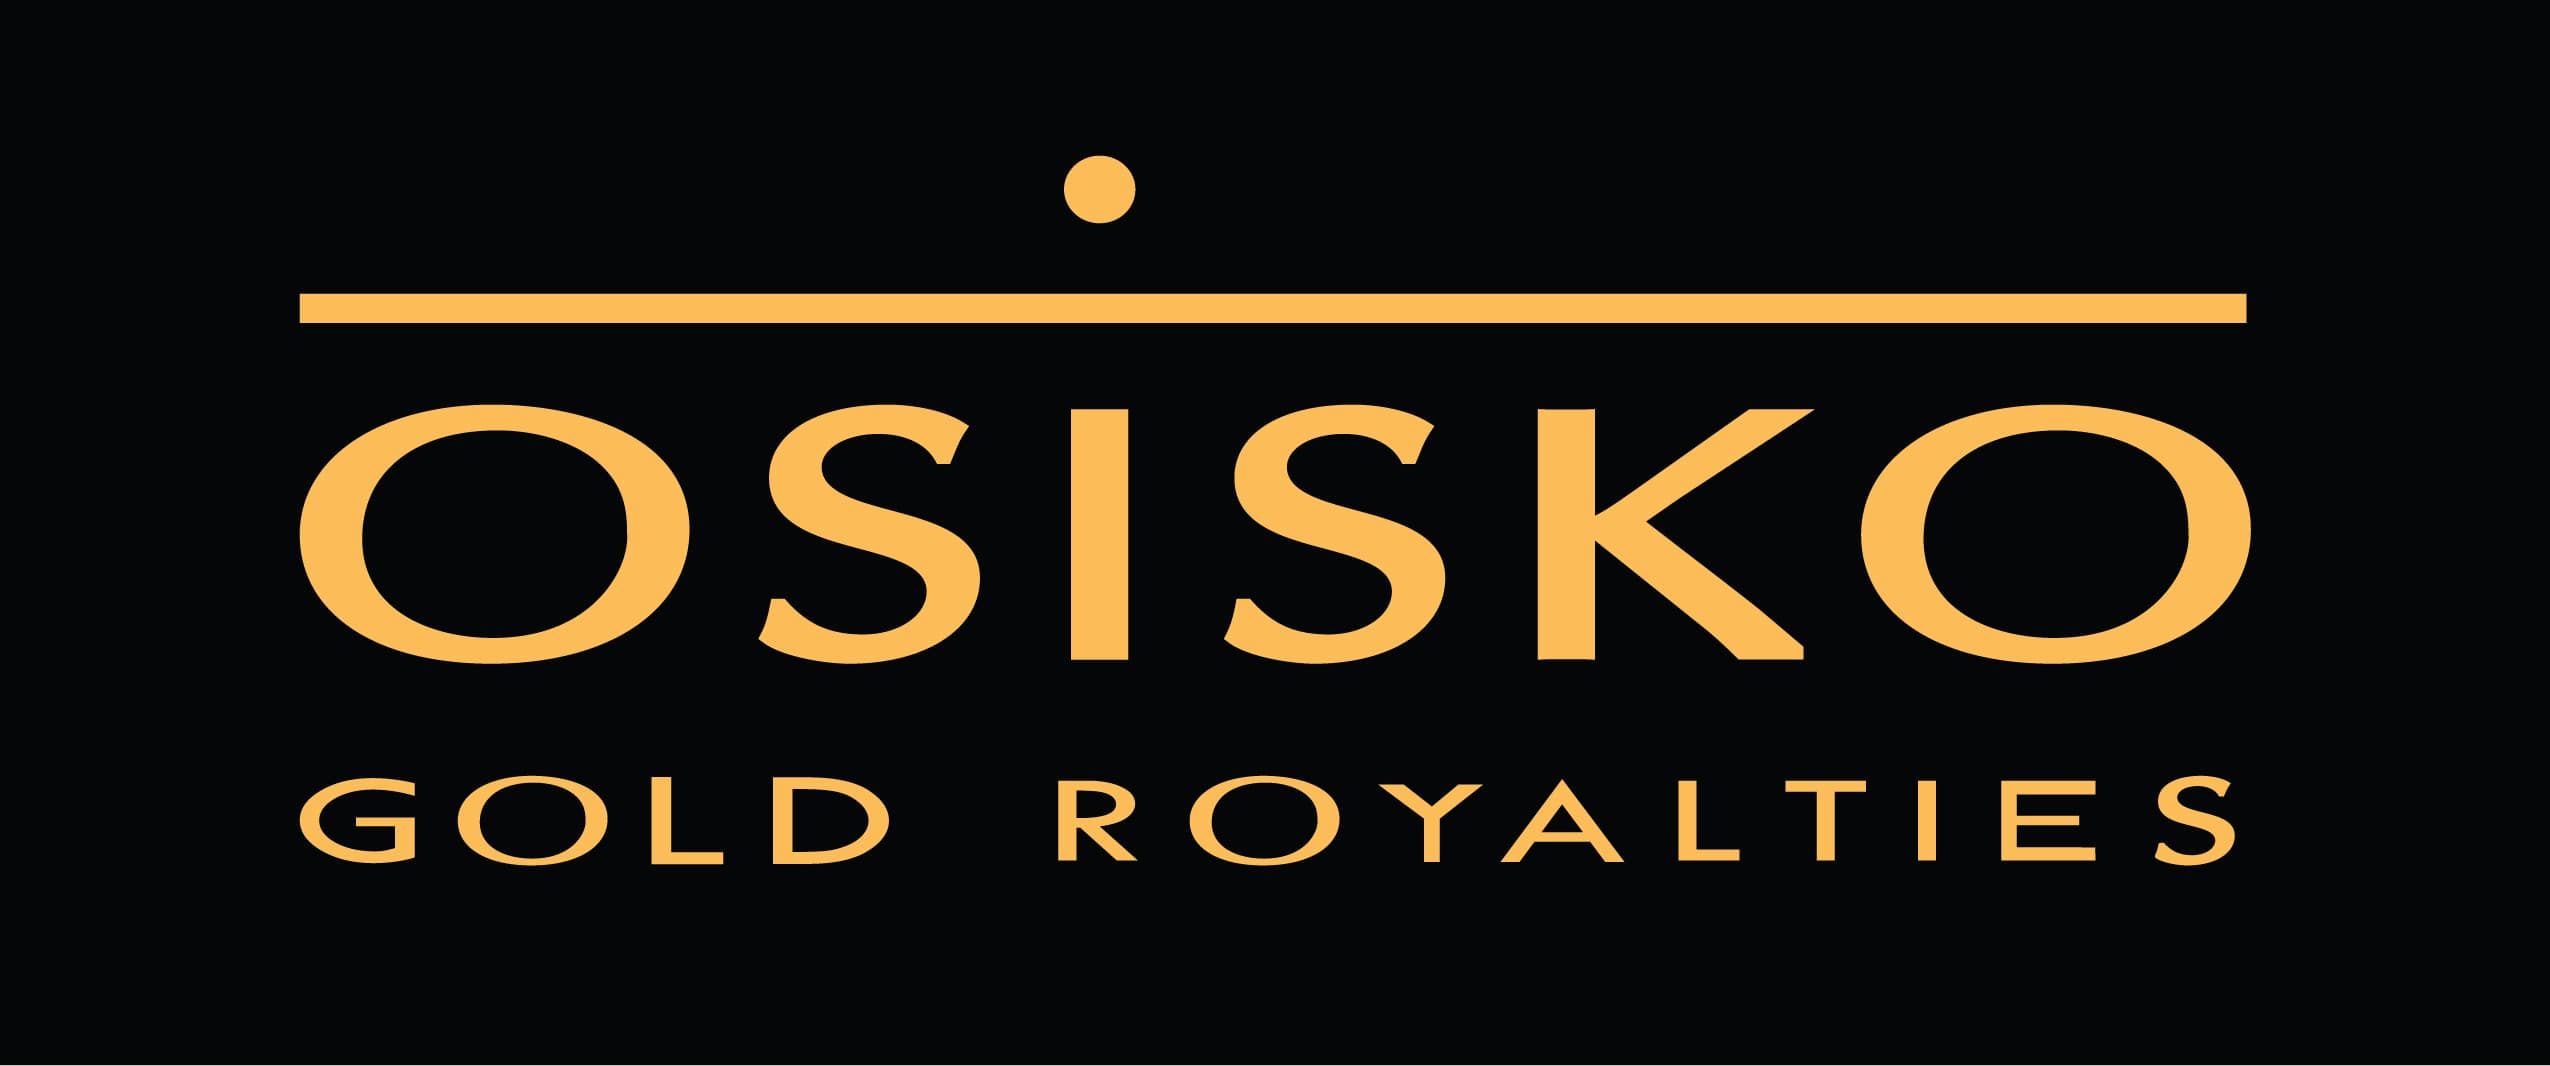 Osisko Gold Royalties Ltd: Stock Performance and Financial Health Analysis